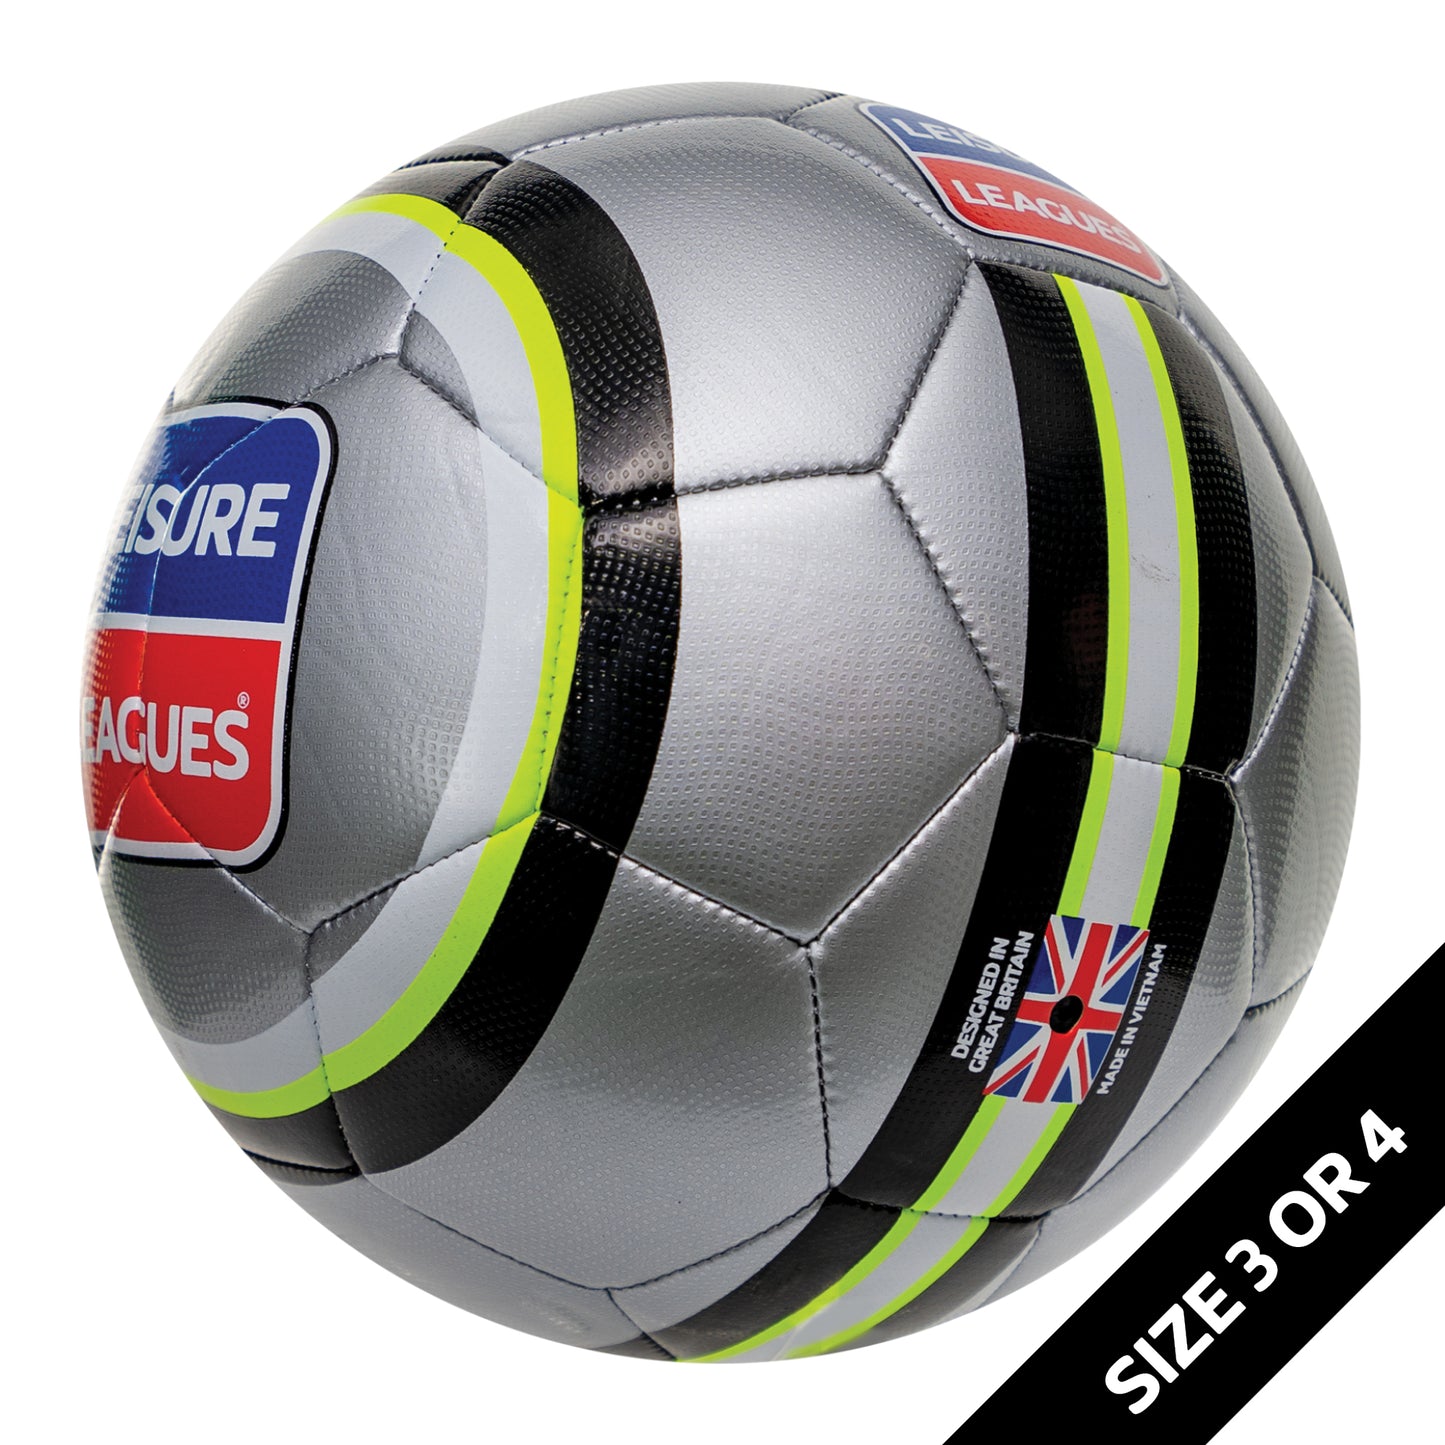 Leisure leagues football Size 3 Size 4 Ball Junior Ball